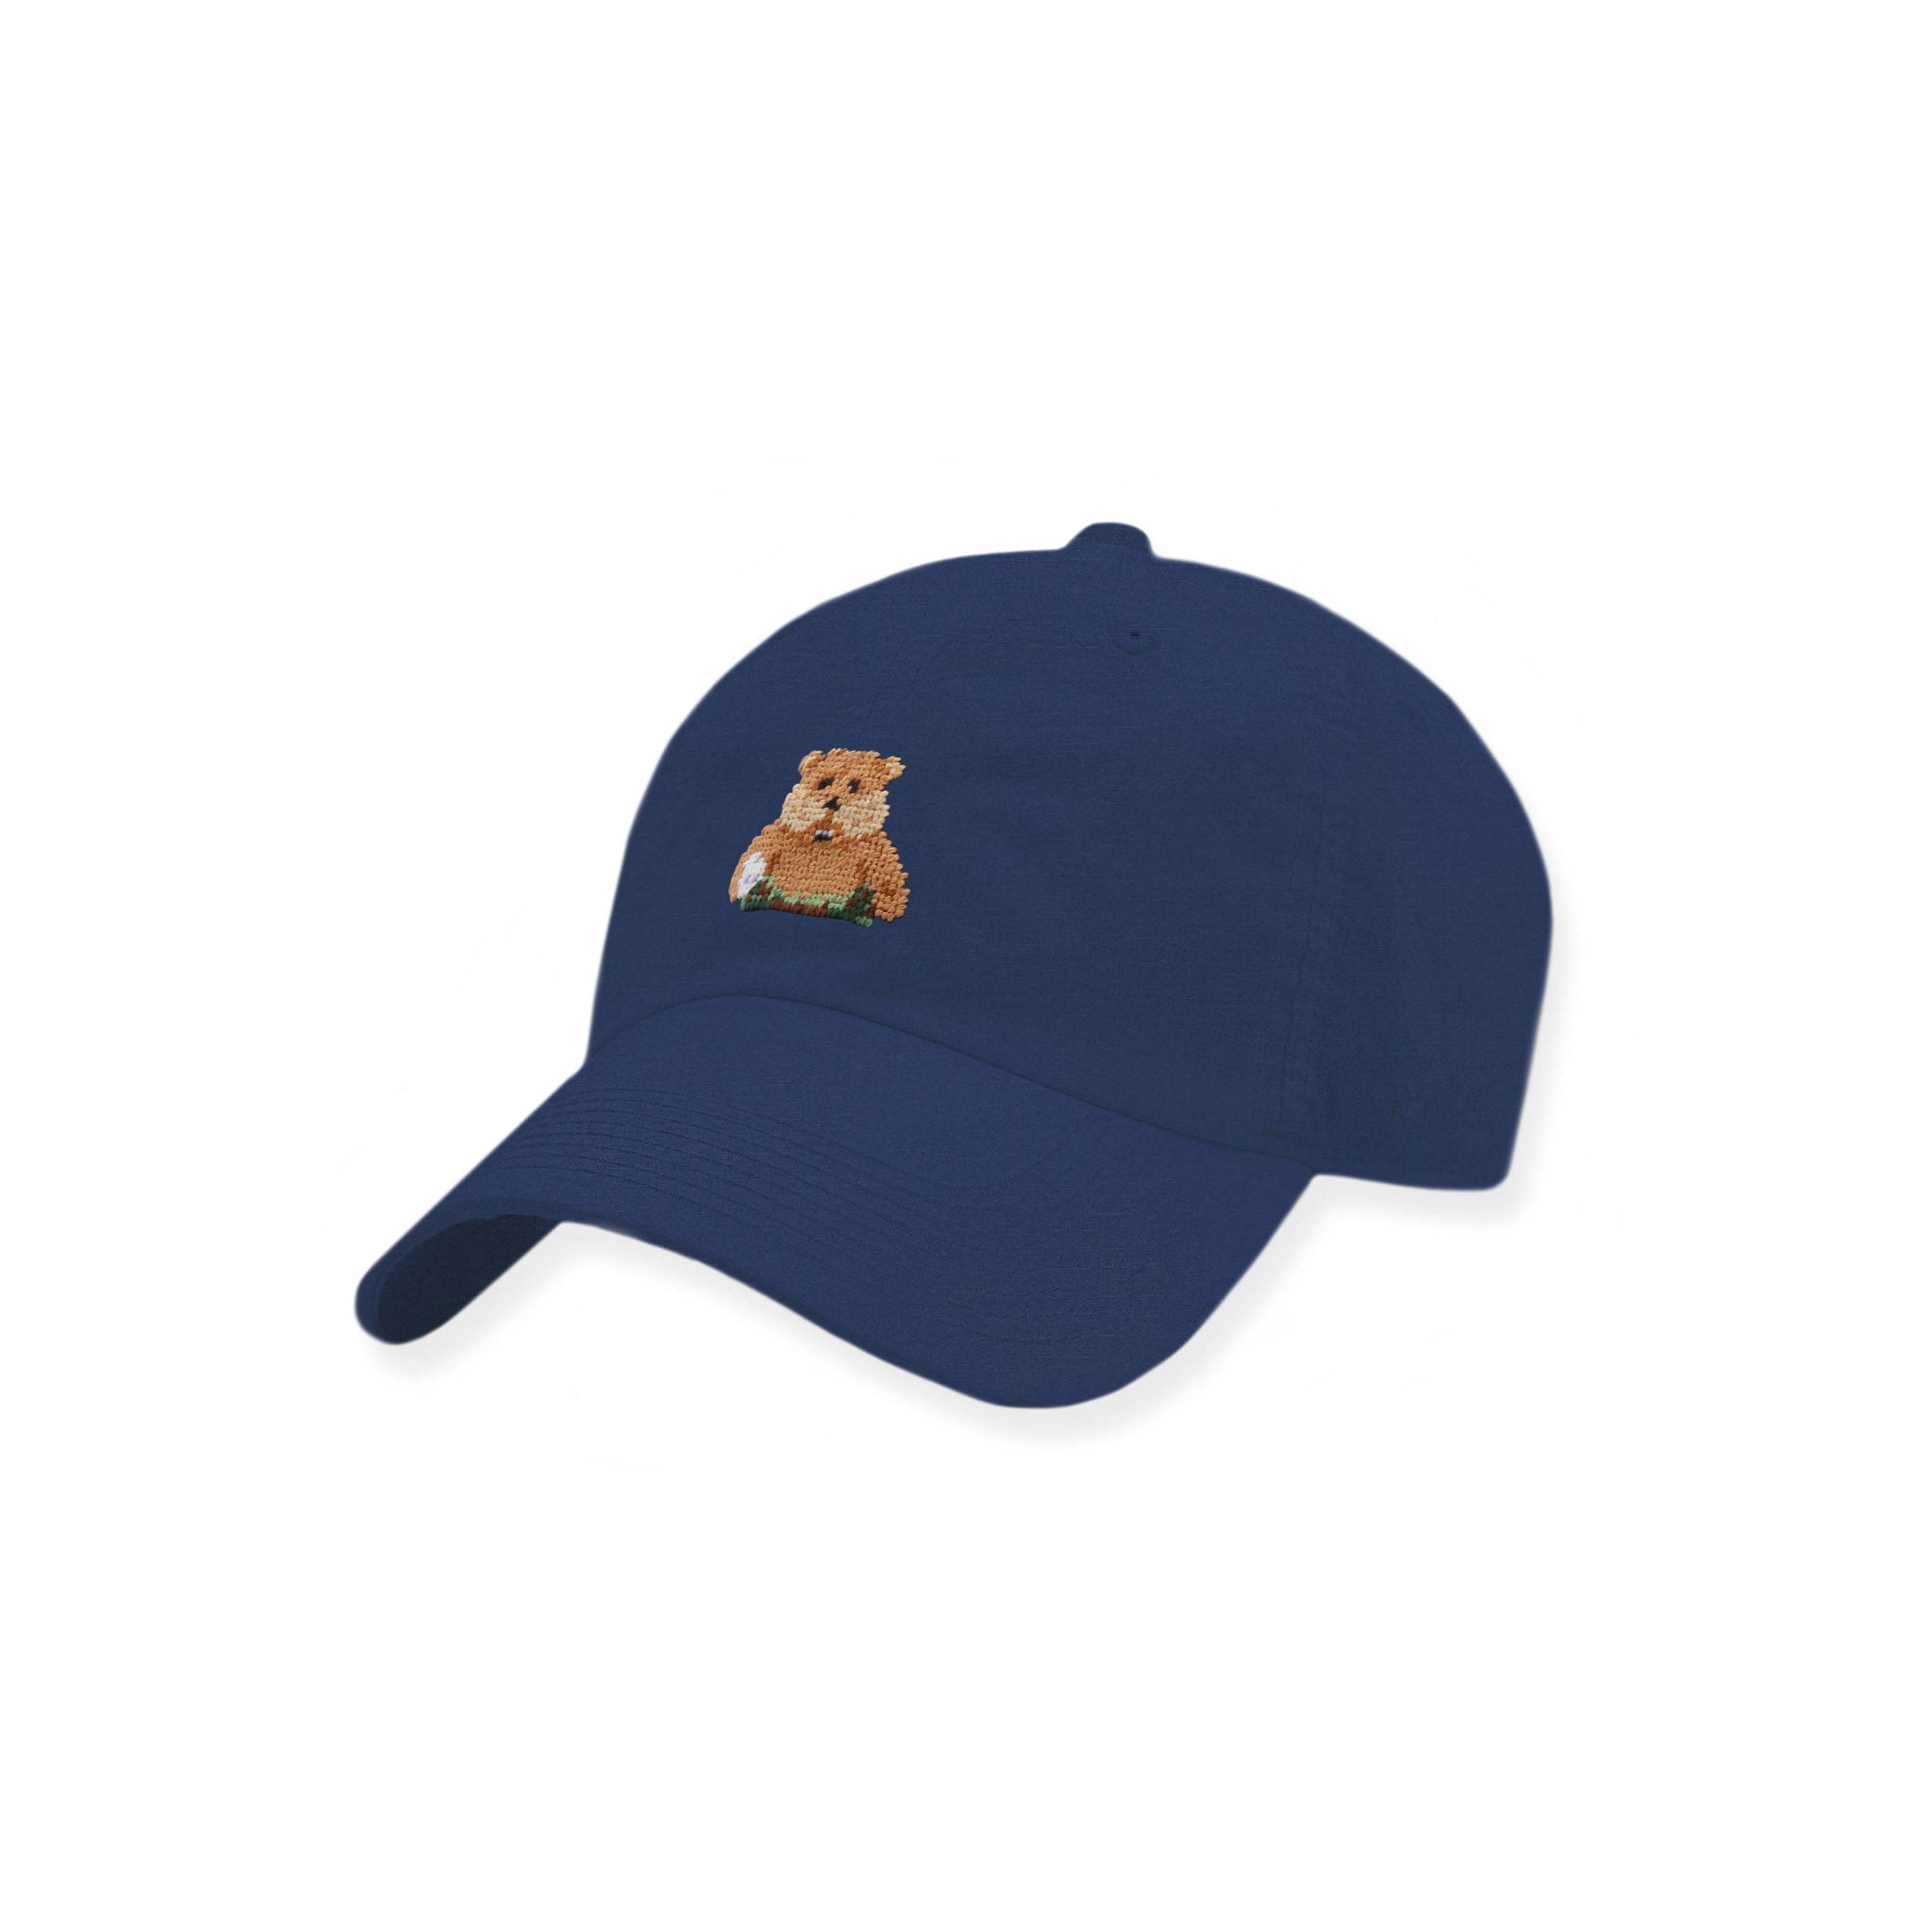 Gopher Golf Performance Hat (Navy)